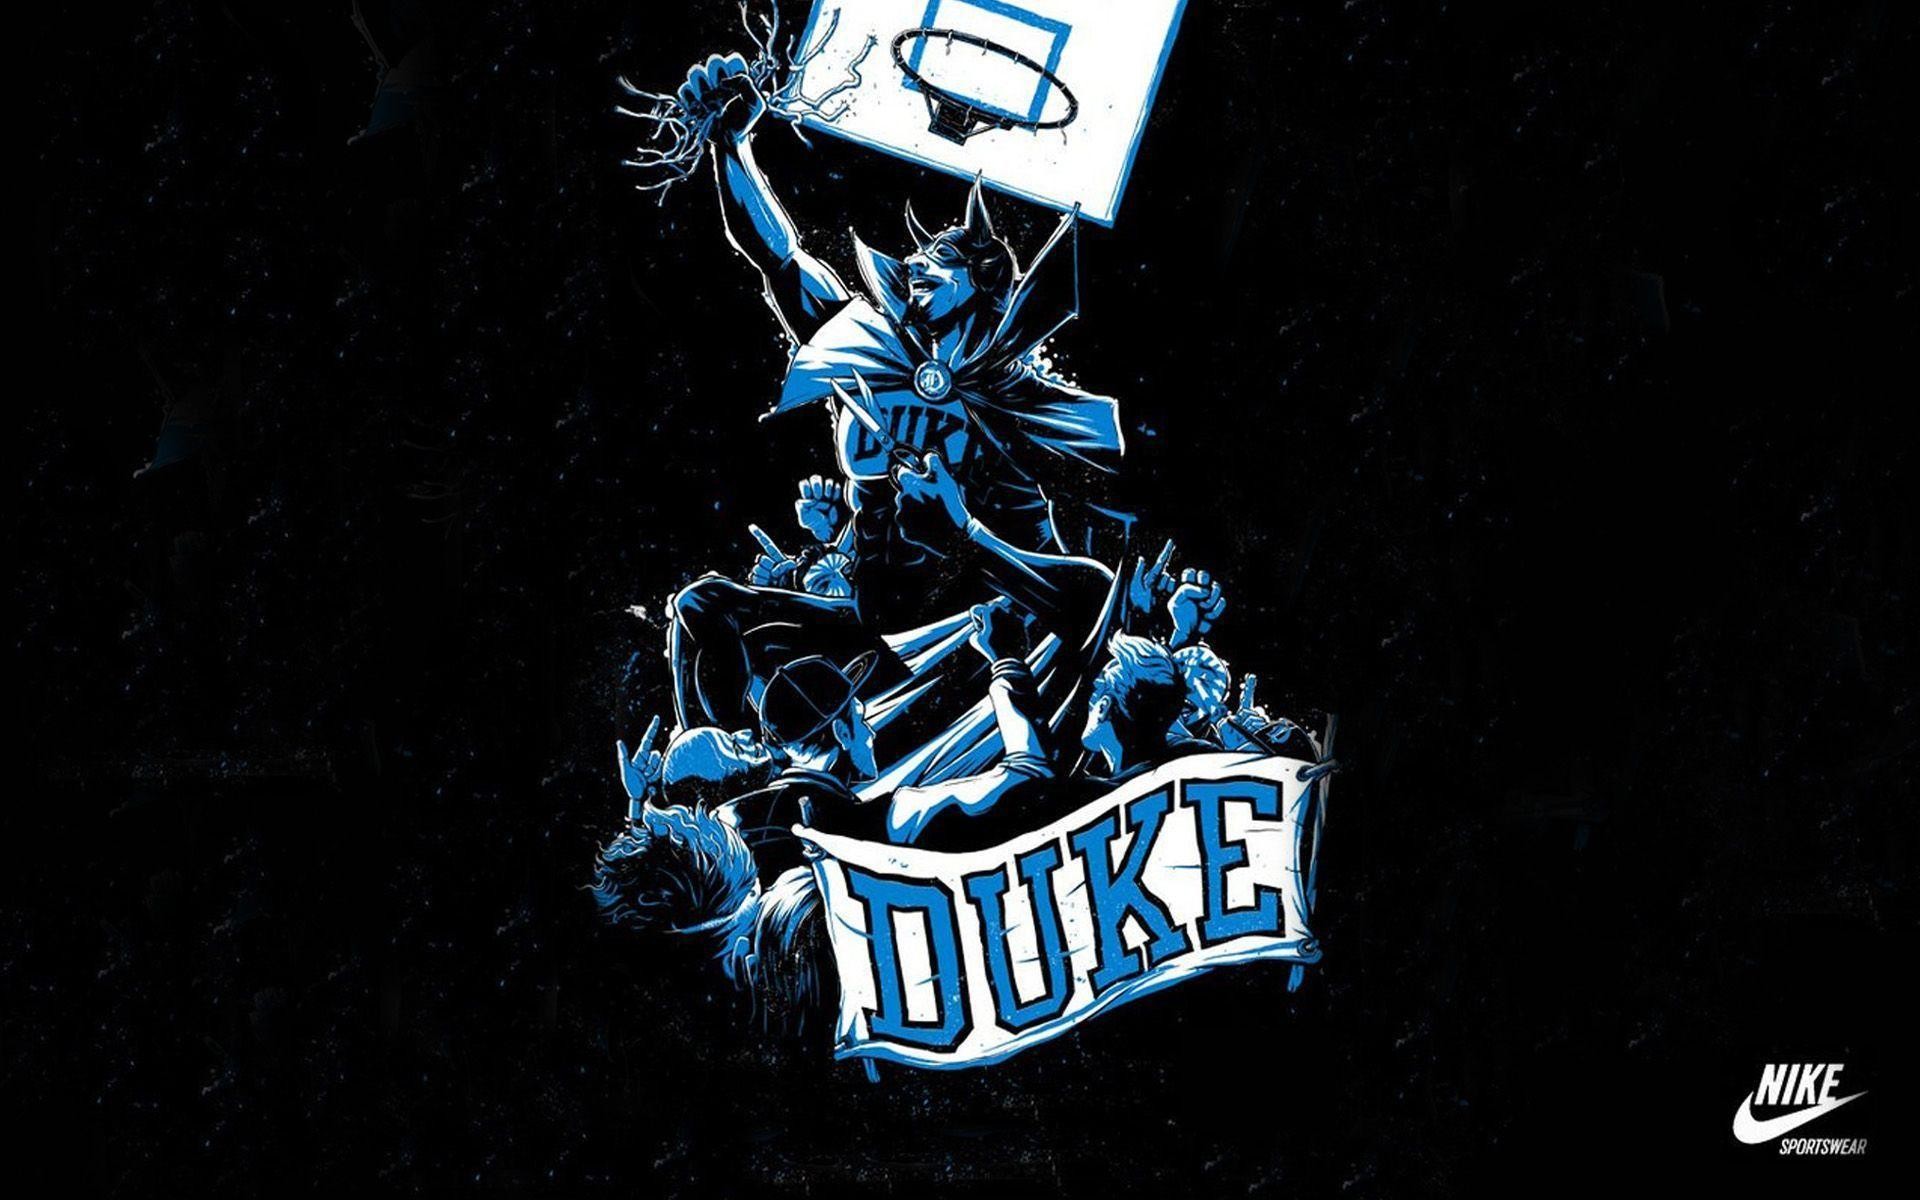 Duke basketball nike logo wallpaper hd in basketball